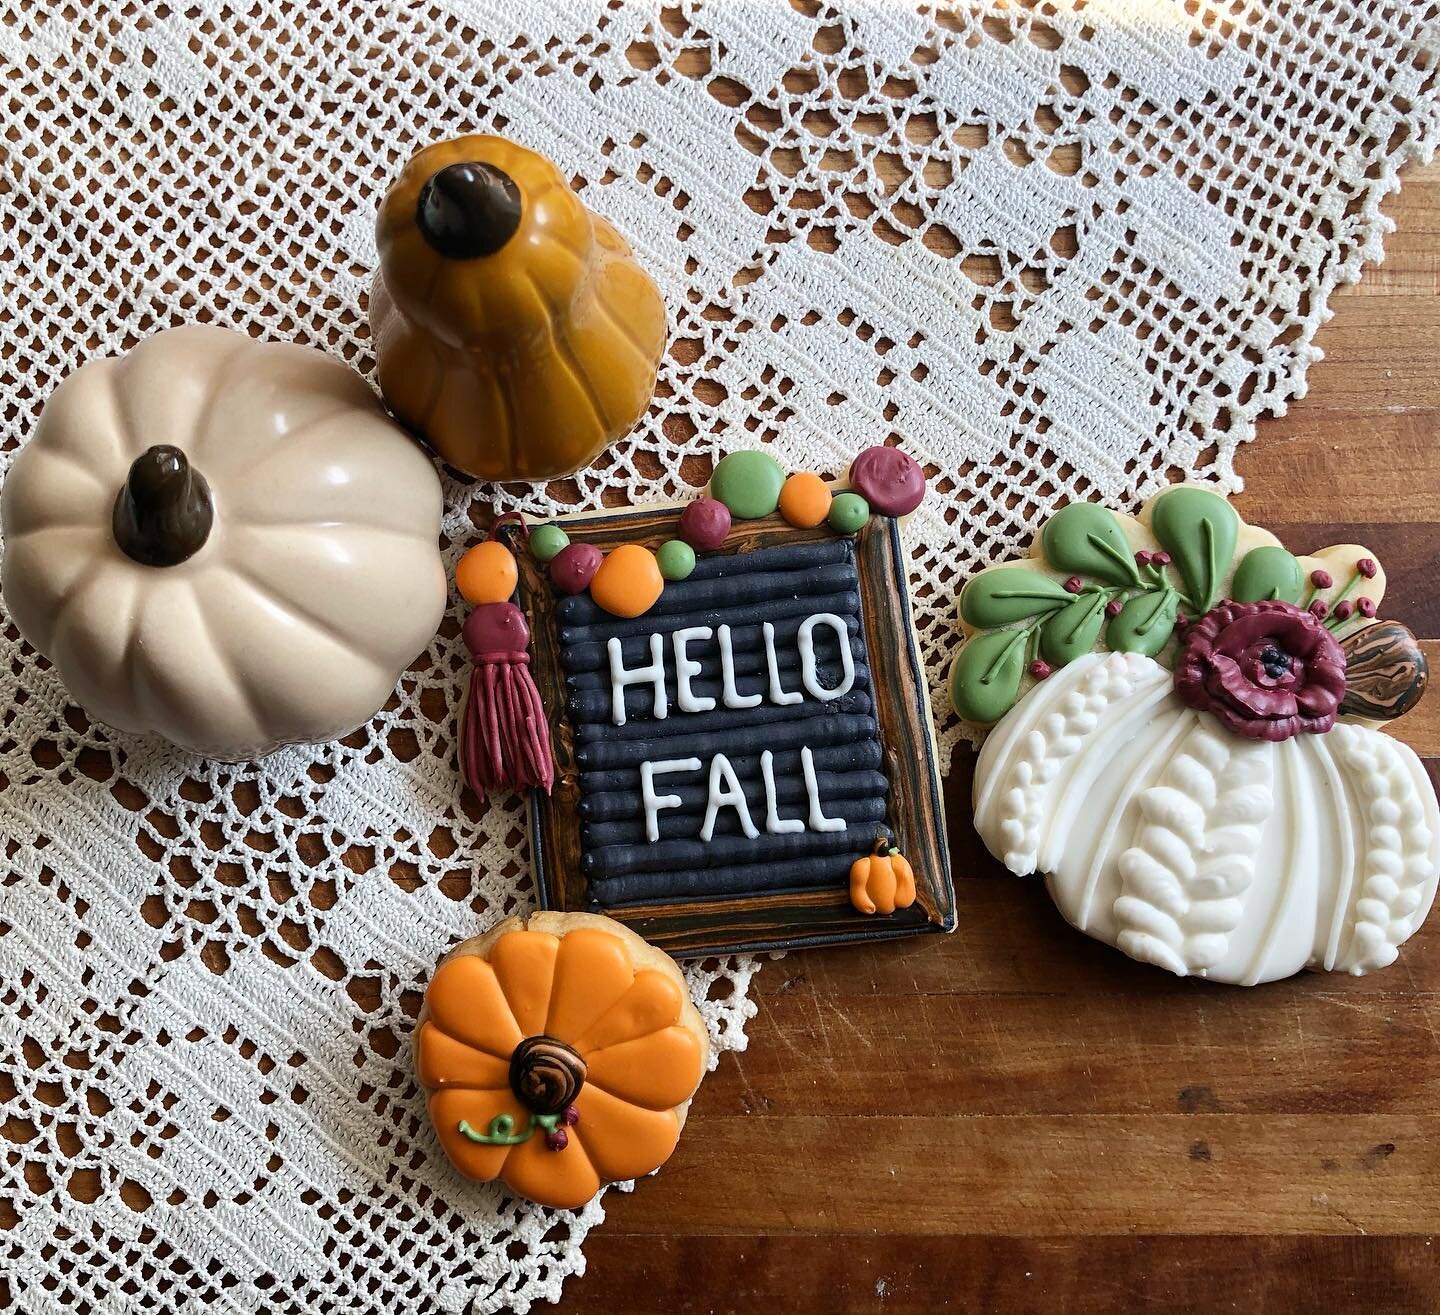 Happy fall, ya&rsquo;ll!! 🍂🌻🍁
.
#hellofall #happyfallyall #autumn #autumnvibes #pumpkin #sweaterweather #cookiesofinstagram #fallcookies #pumpkincookies @kaleidacuts